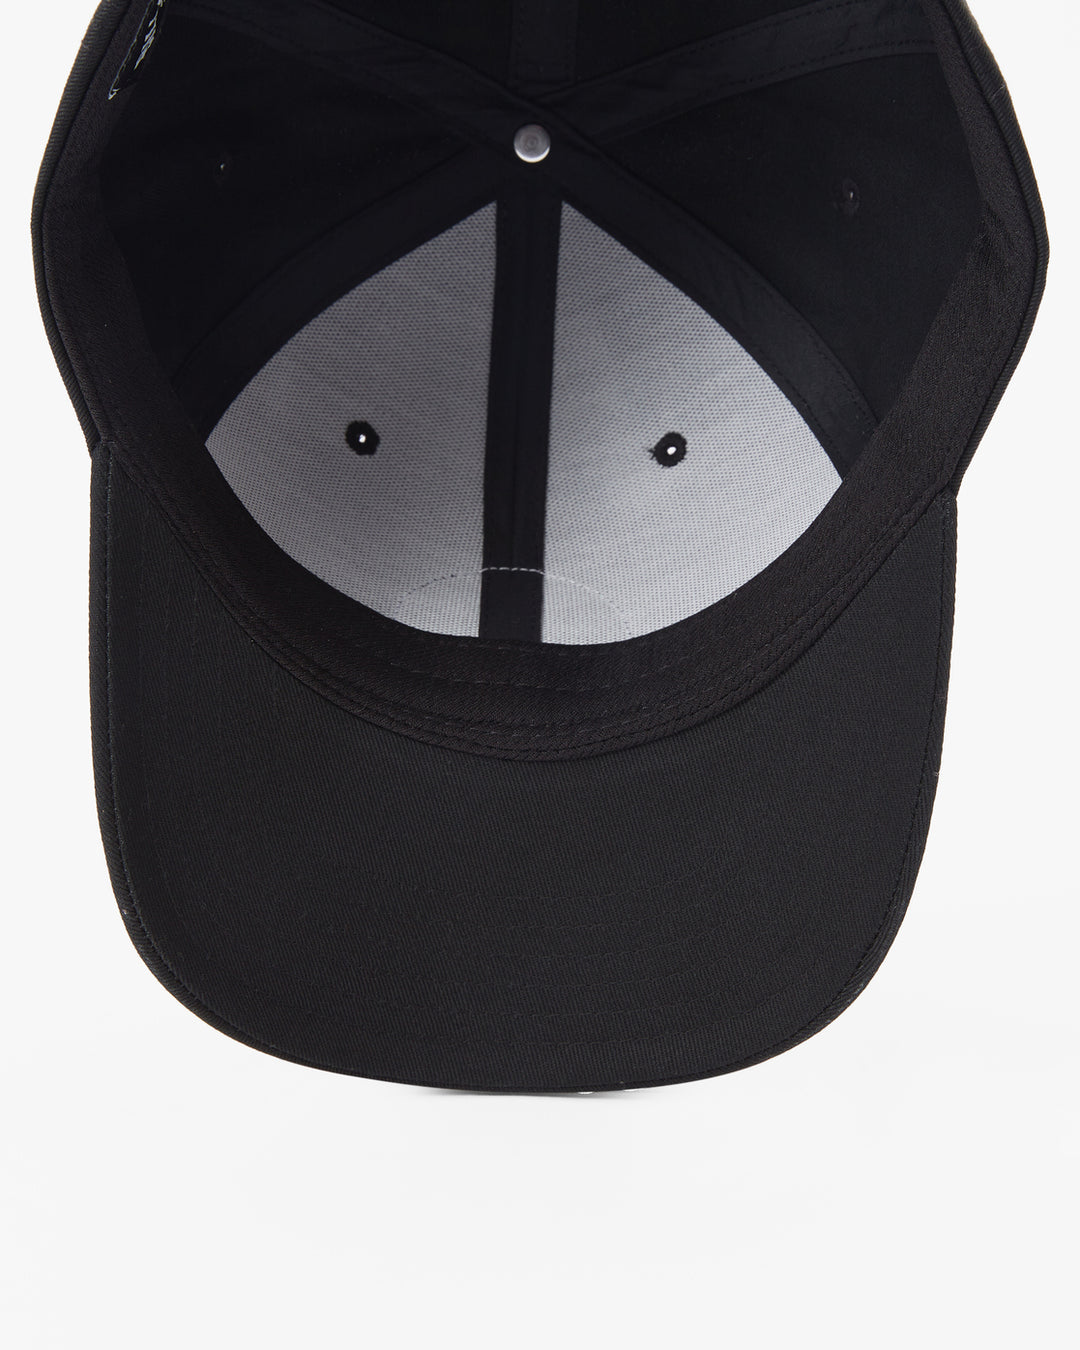 Billabong Hat Walled Snapback Hat - Grey Heather - Sun Diego Boardshop